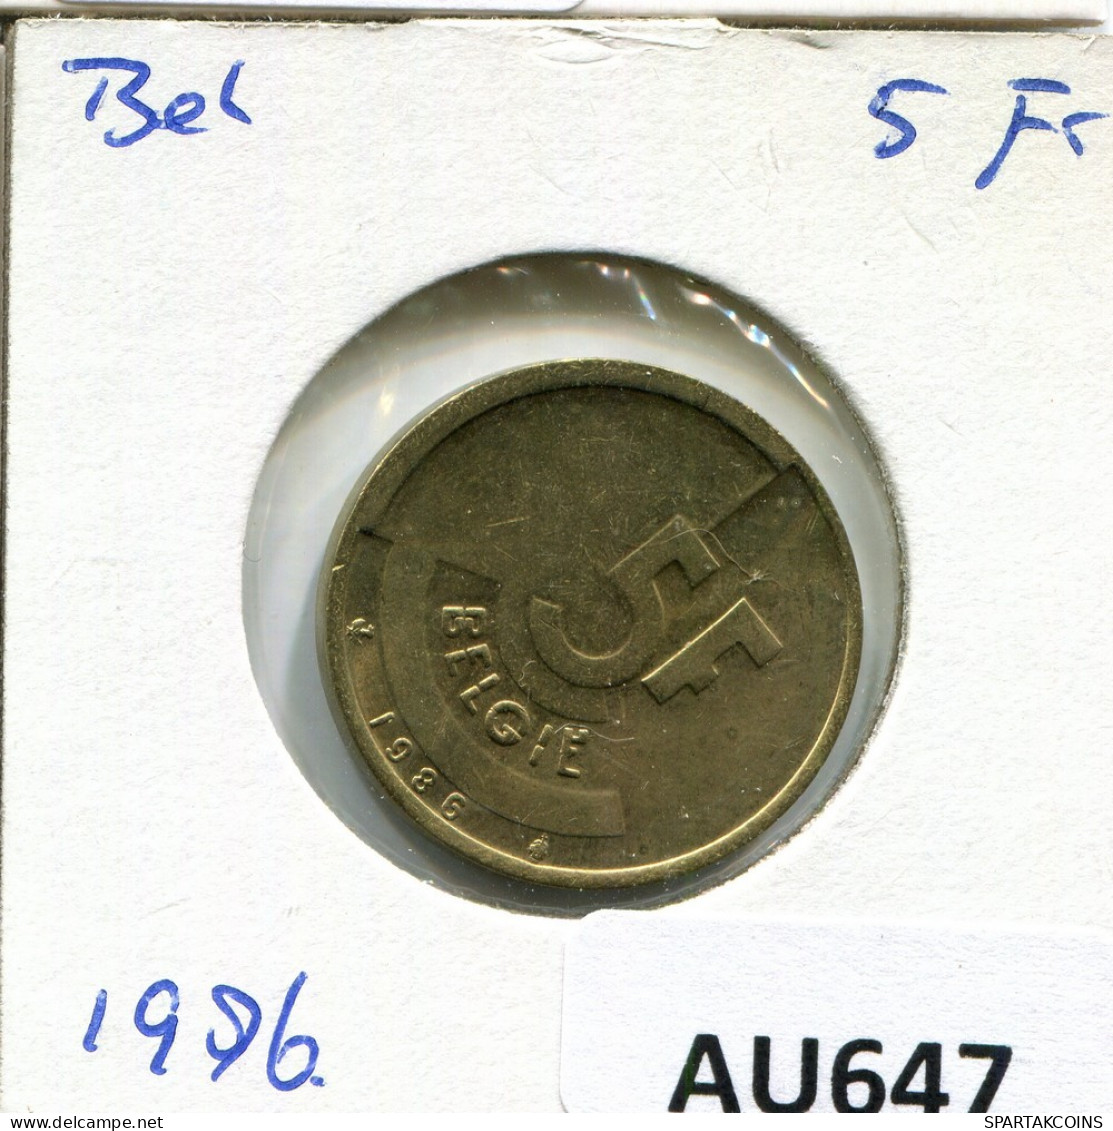 5 FRANCS 1996 DUTCH Text BELGIUM Coin #AU647.U - 5 Frank